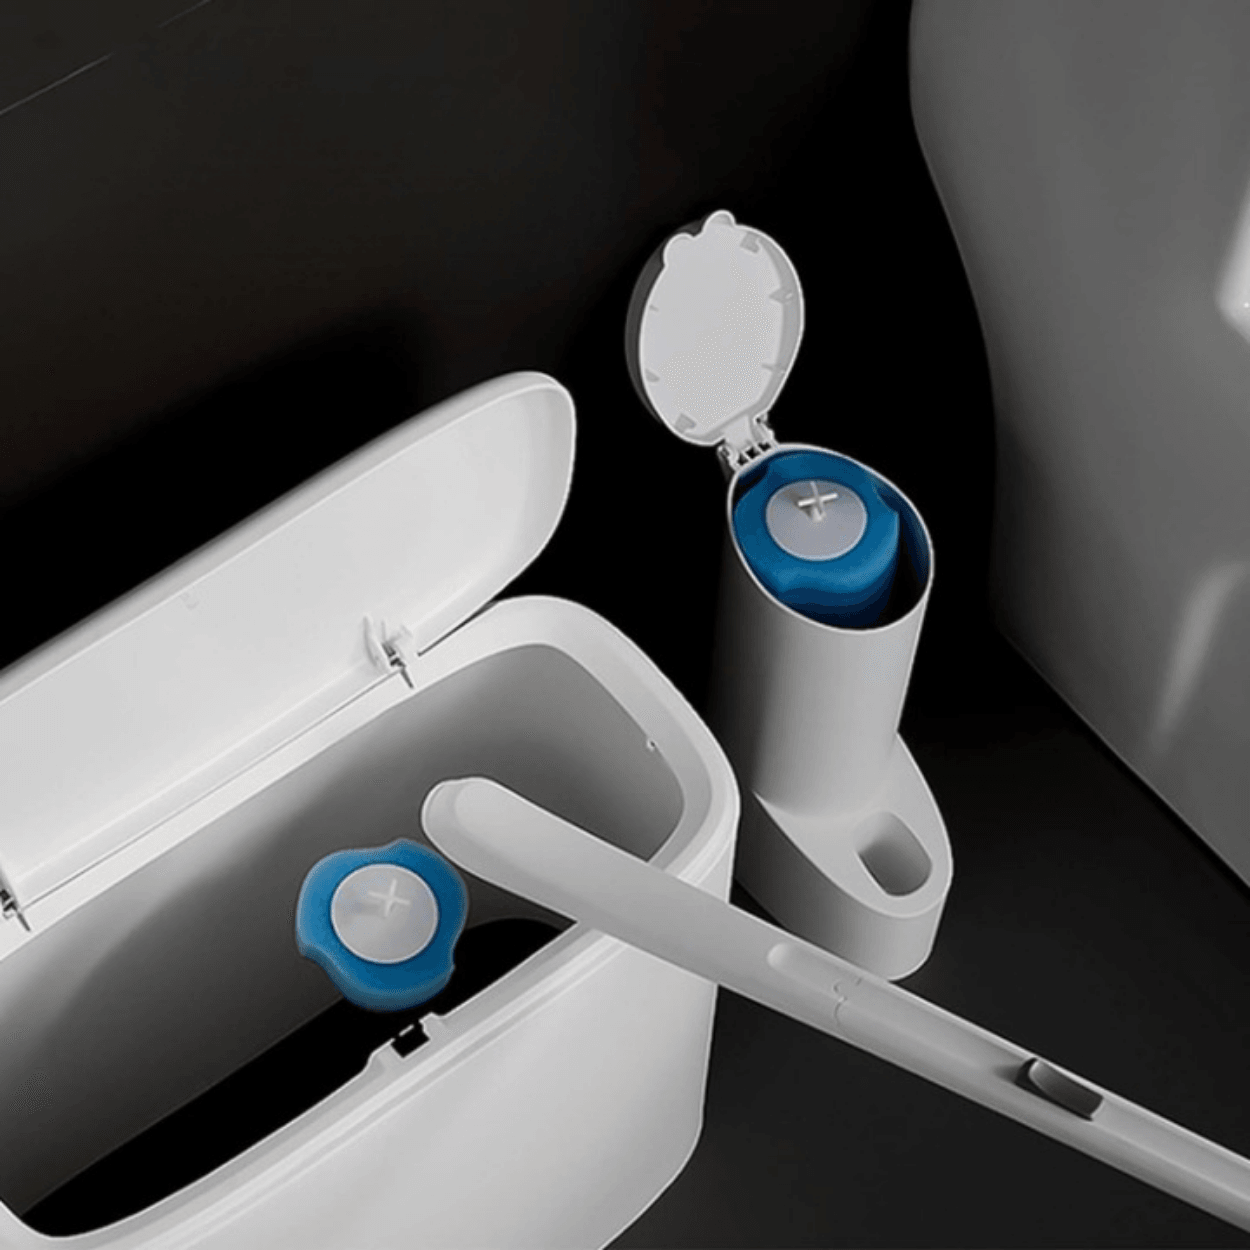 Kullan At Yedek 10 Adet Sünger Mavi Su Ve Deterjanlı Tuvalet Süngeri 10 Adet Sünger Hediye